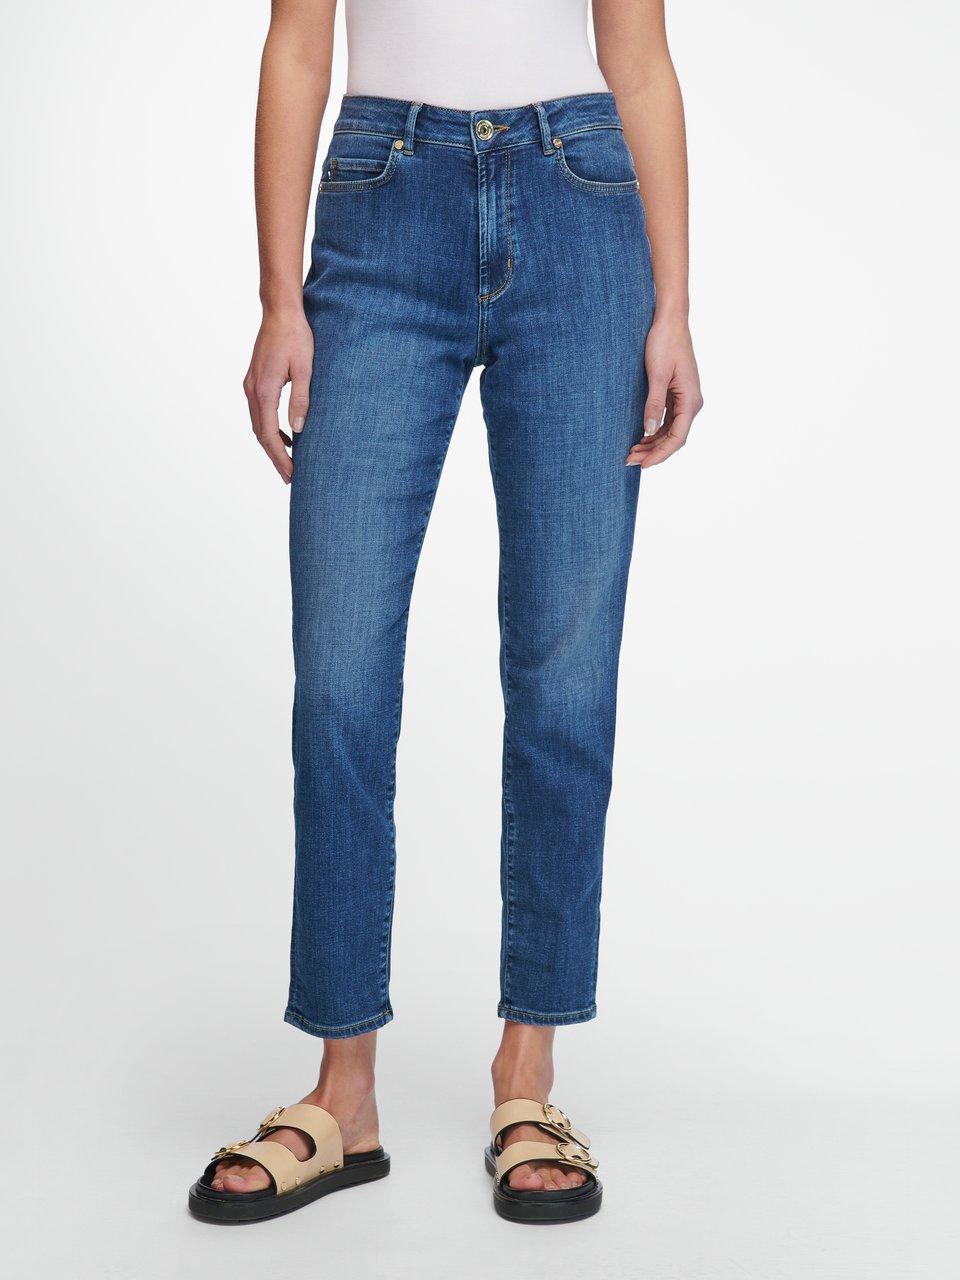 - jeans style 5-pocket - denim in Joop! Ankle-length blue